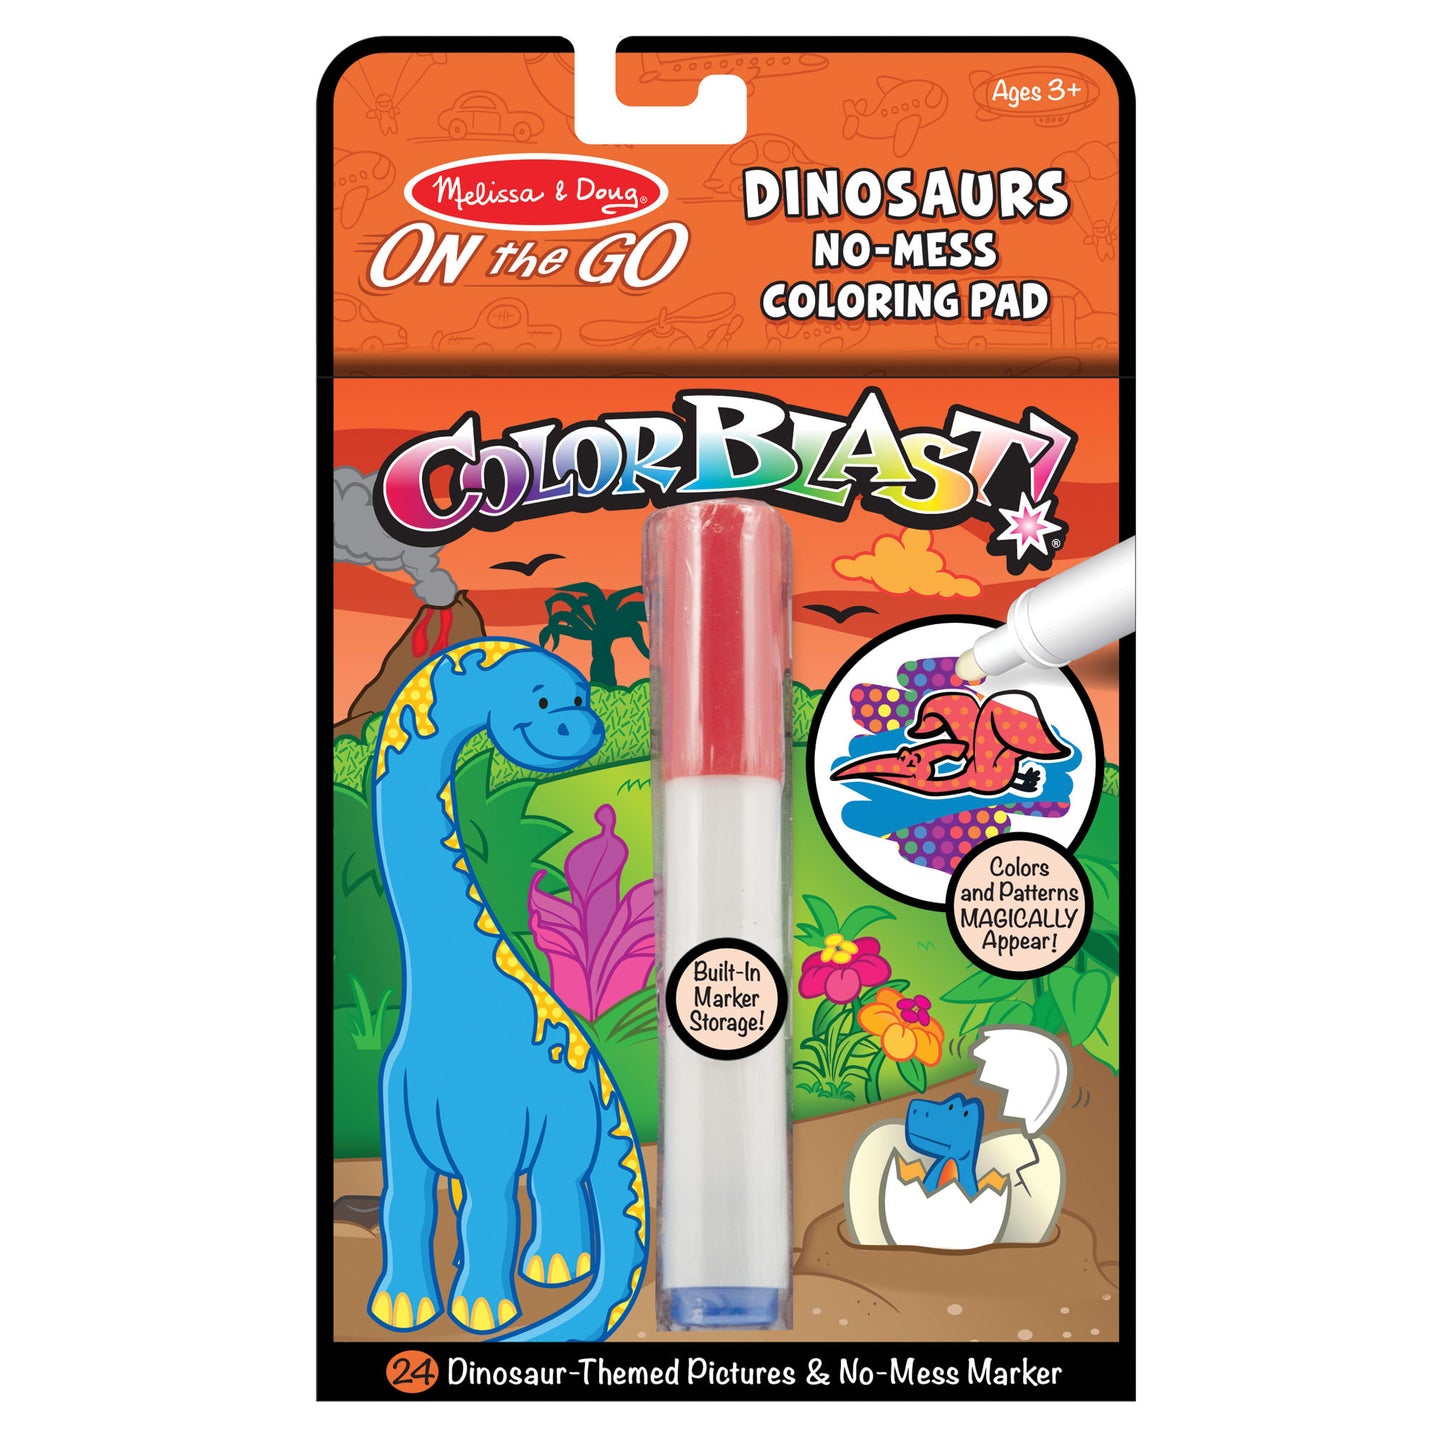 Colorblast No Mess Coloring Pad | Dinosaurs